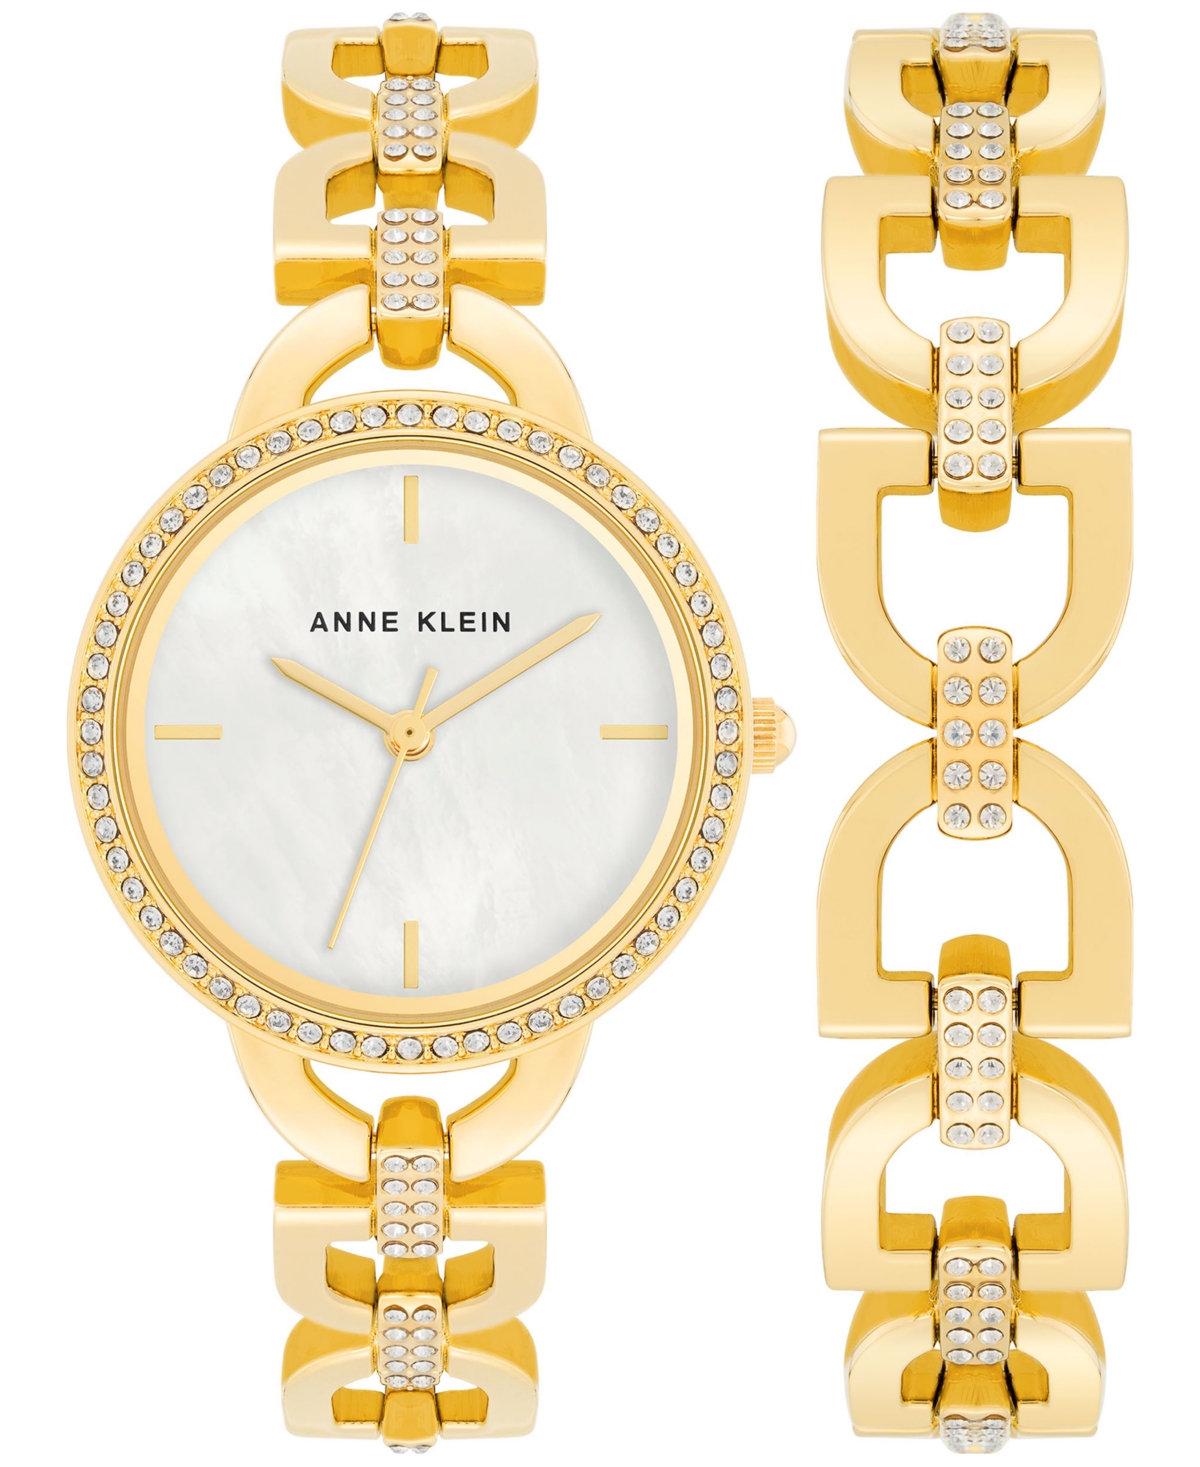 Anne Klein Women's Crystal Accent Bracelet Watch 31mm Gift Set In Gold Tone